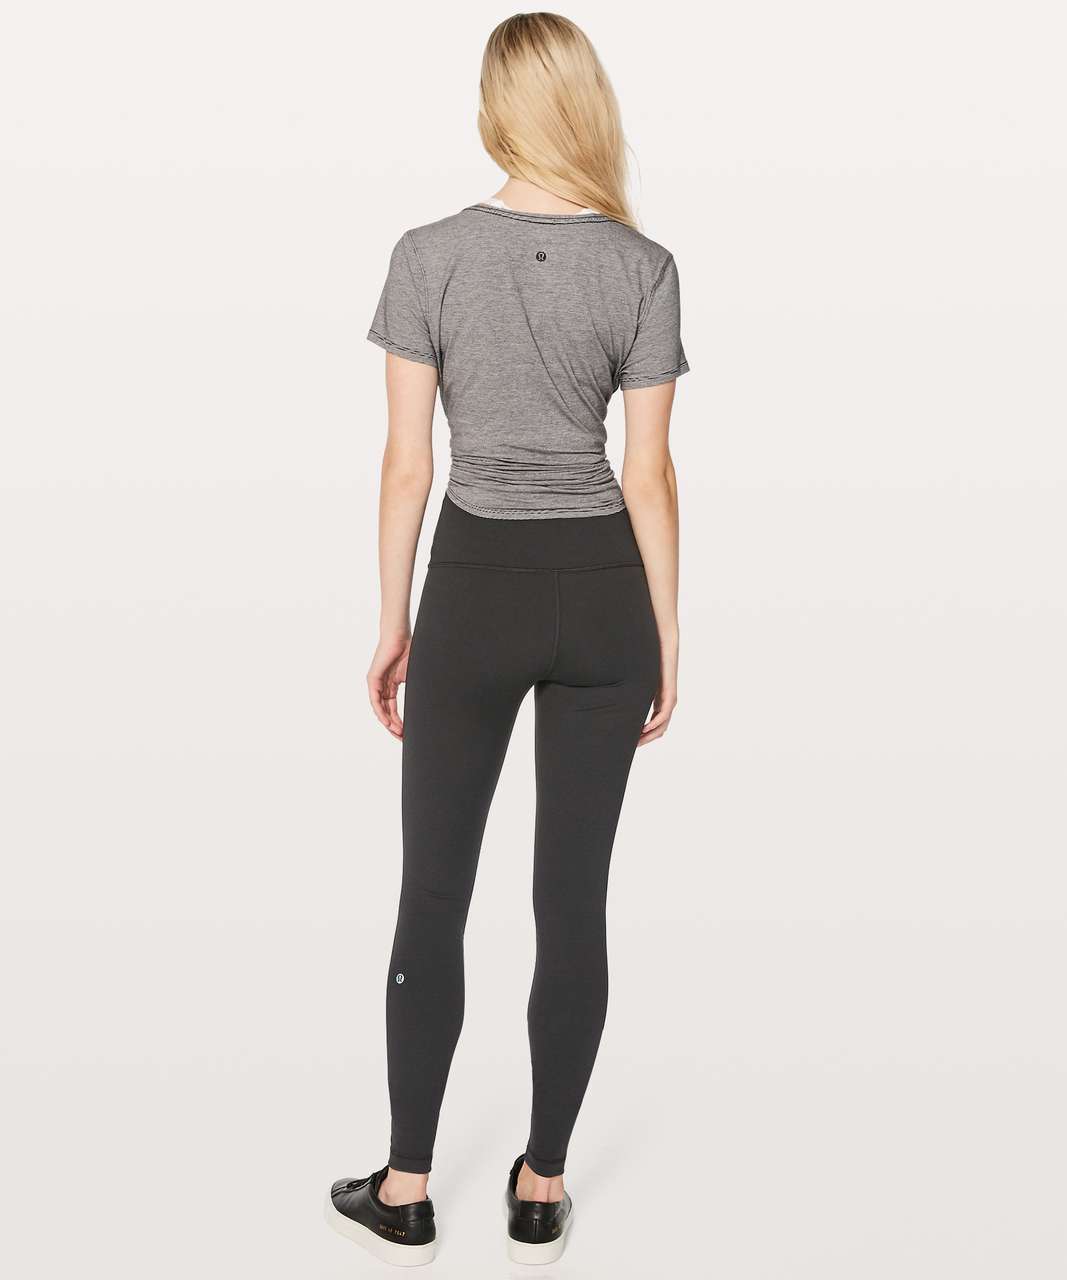 Lululemon Wunder Under leggings 28” inseam size 6 thick leggings Black -  $54 (54% Off Retail) - From Discount